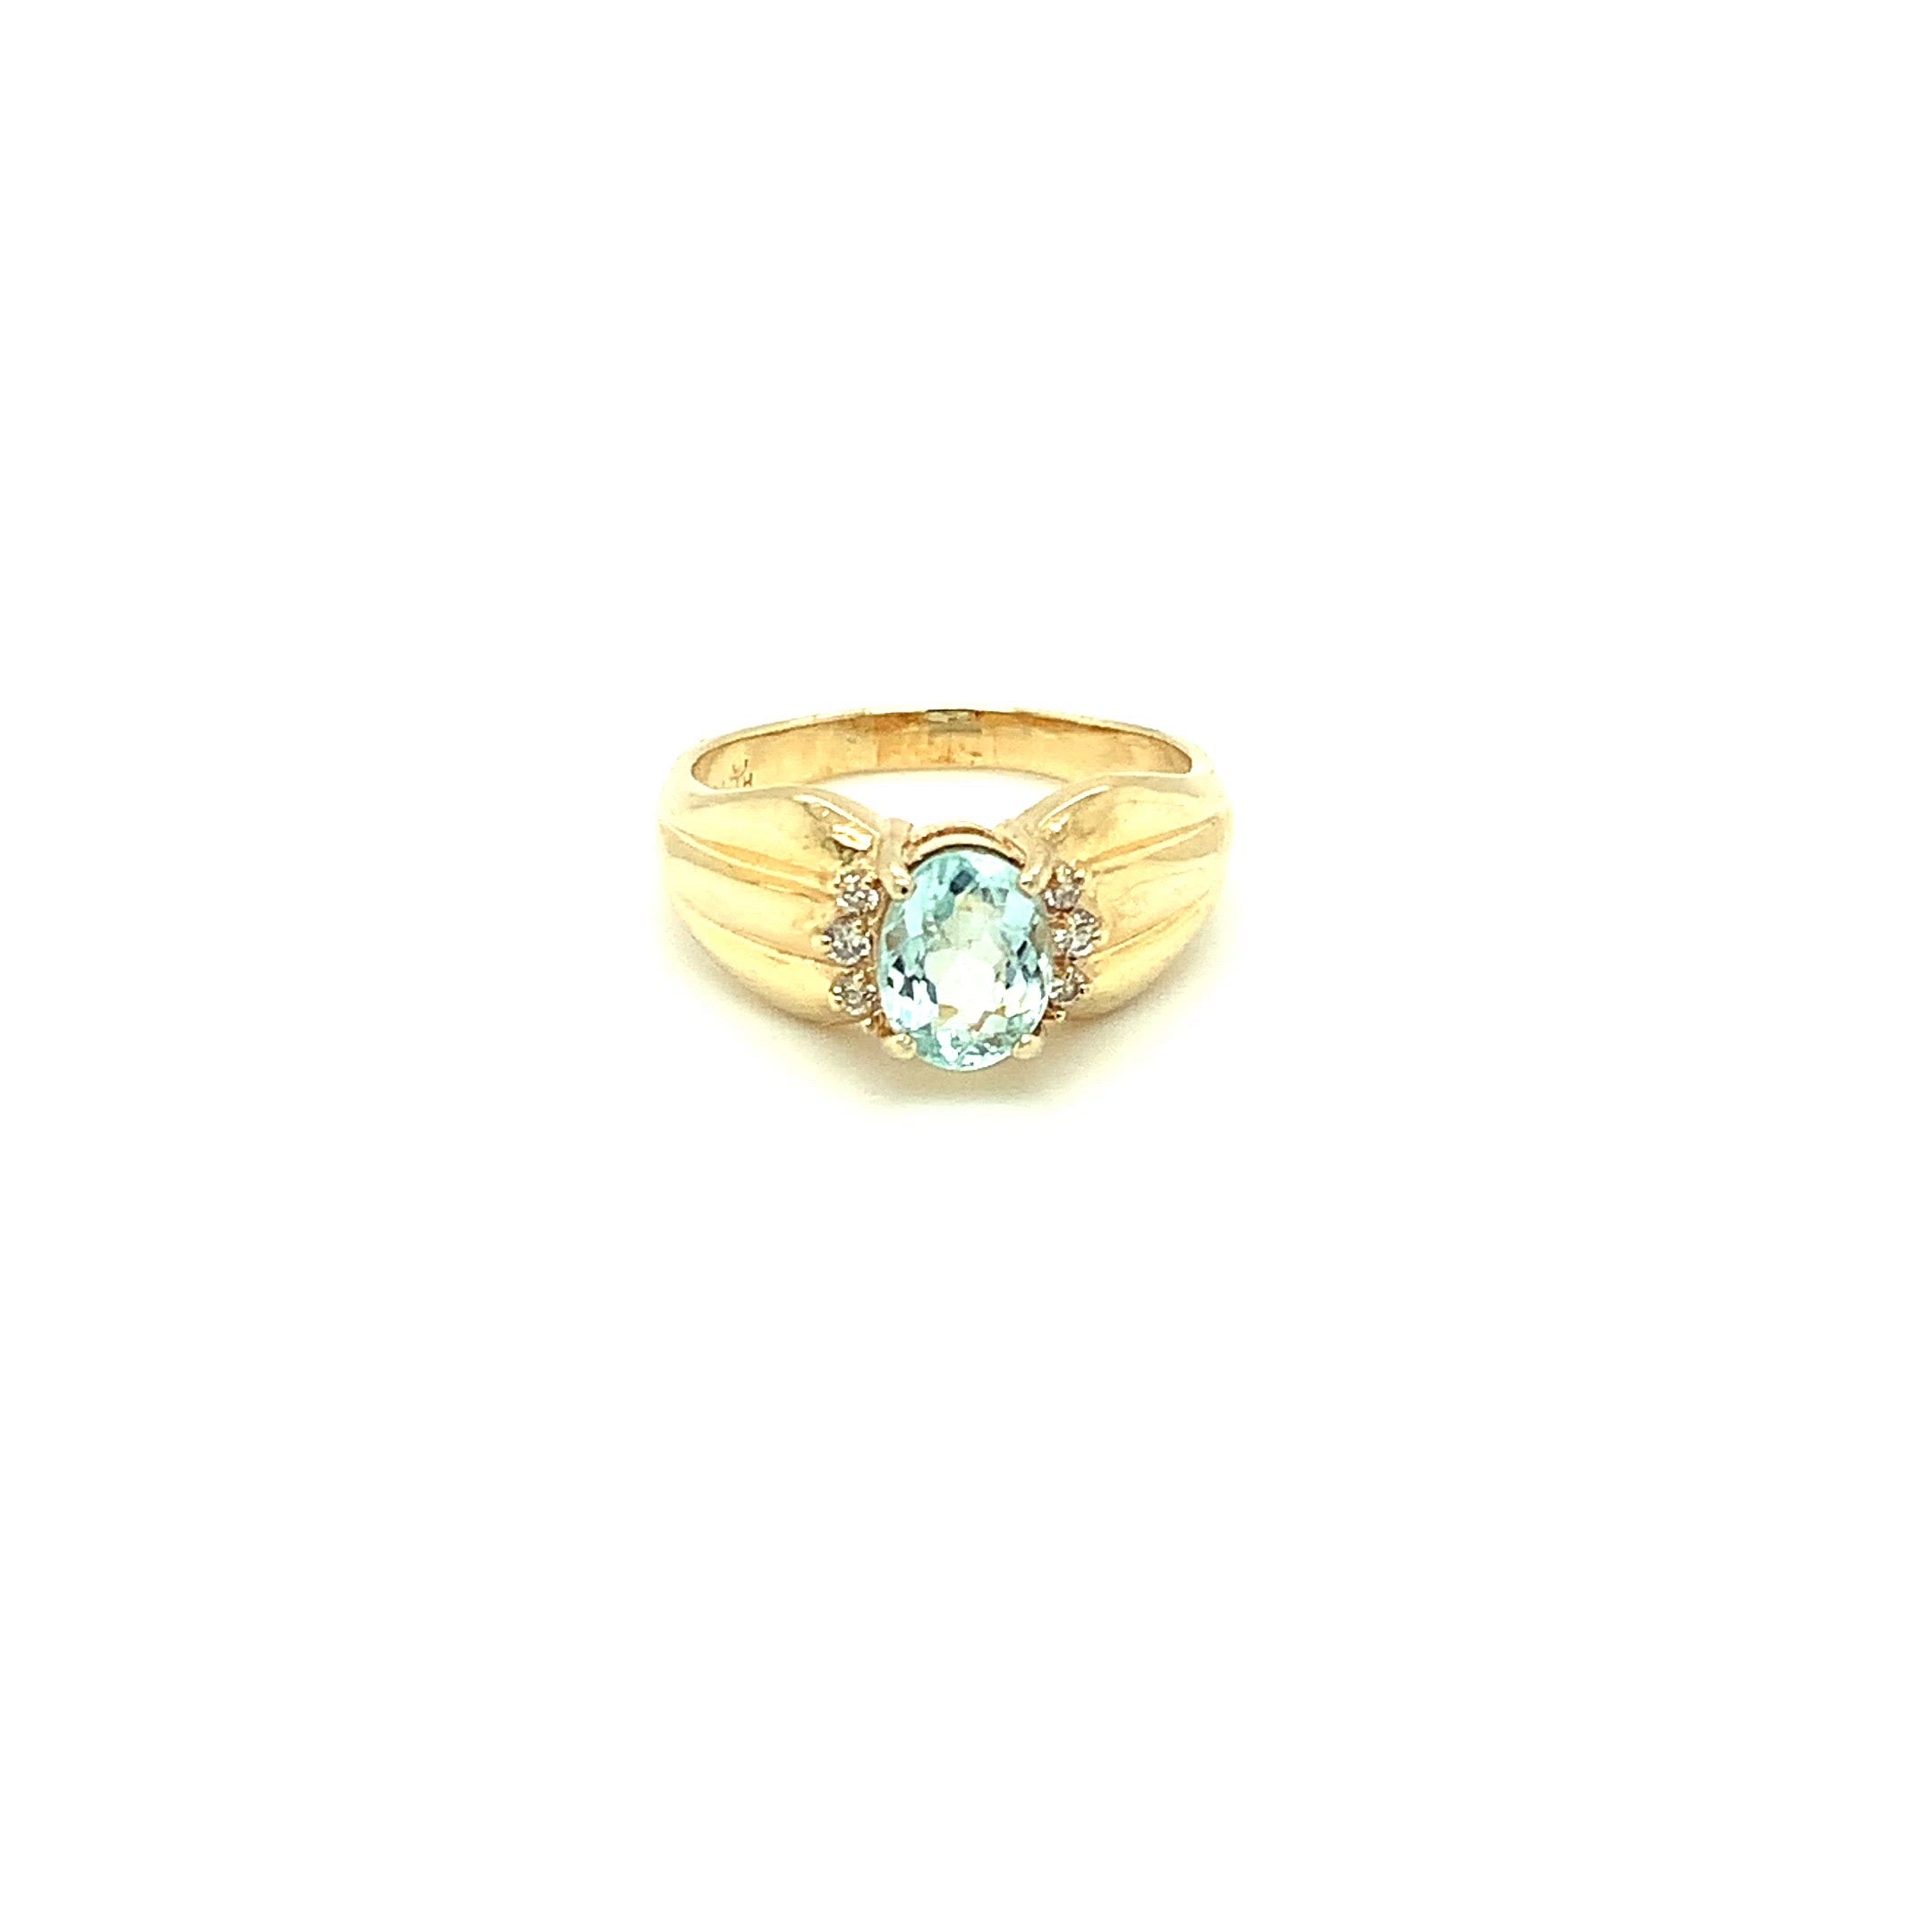 Natural Paraiba Tourmaline & Diamond Ring 14K Solid Gold 1.58tcw Rare Gemstone Women's Ring Diamond Halo Birthstone Ring Fine Estate Jewelry